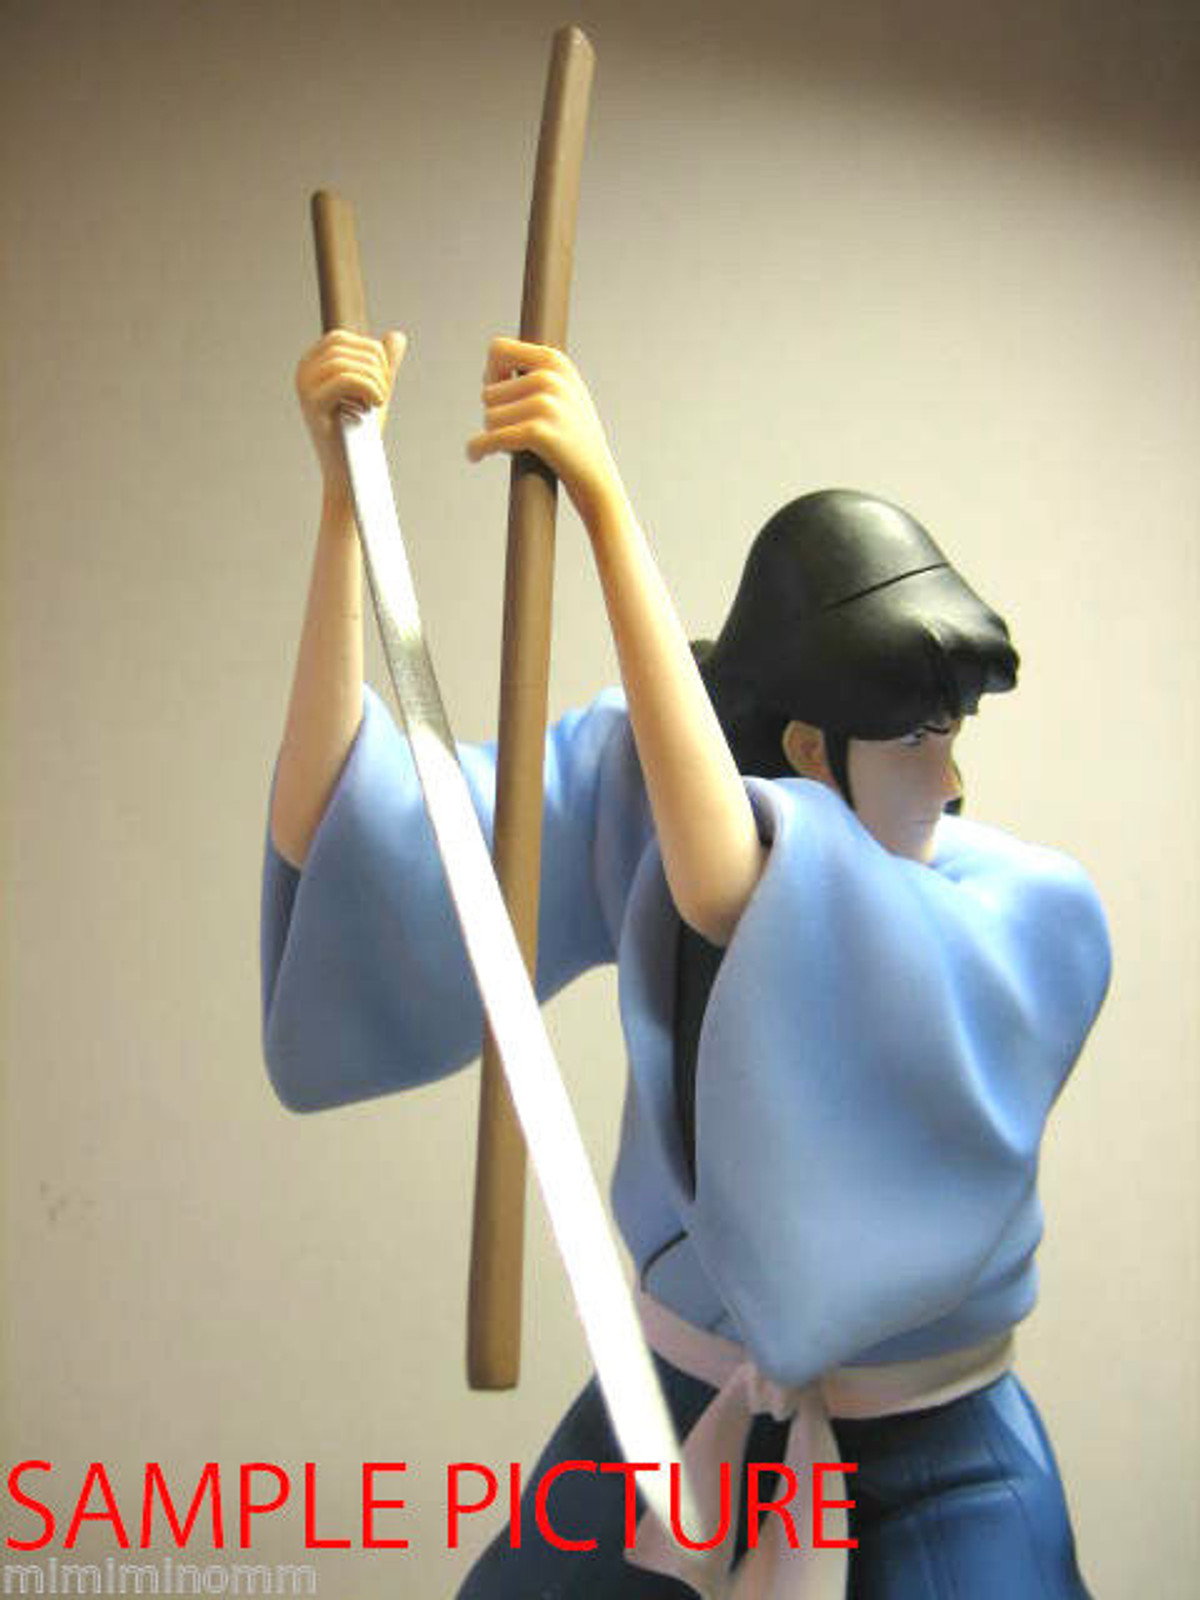 SALE! Ichiban Kuji DX Lupin Ⅲ Figure Zenigata Police K Prize BANPRESTO 9cm